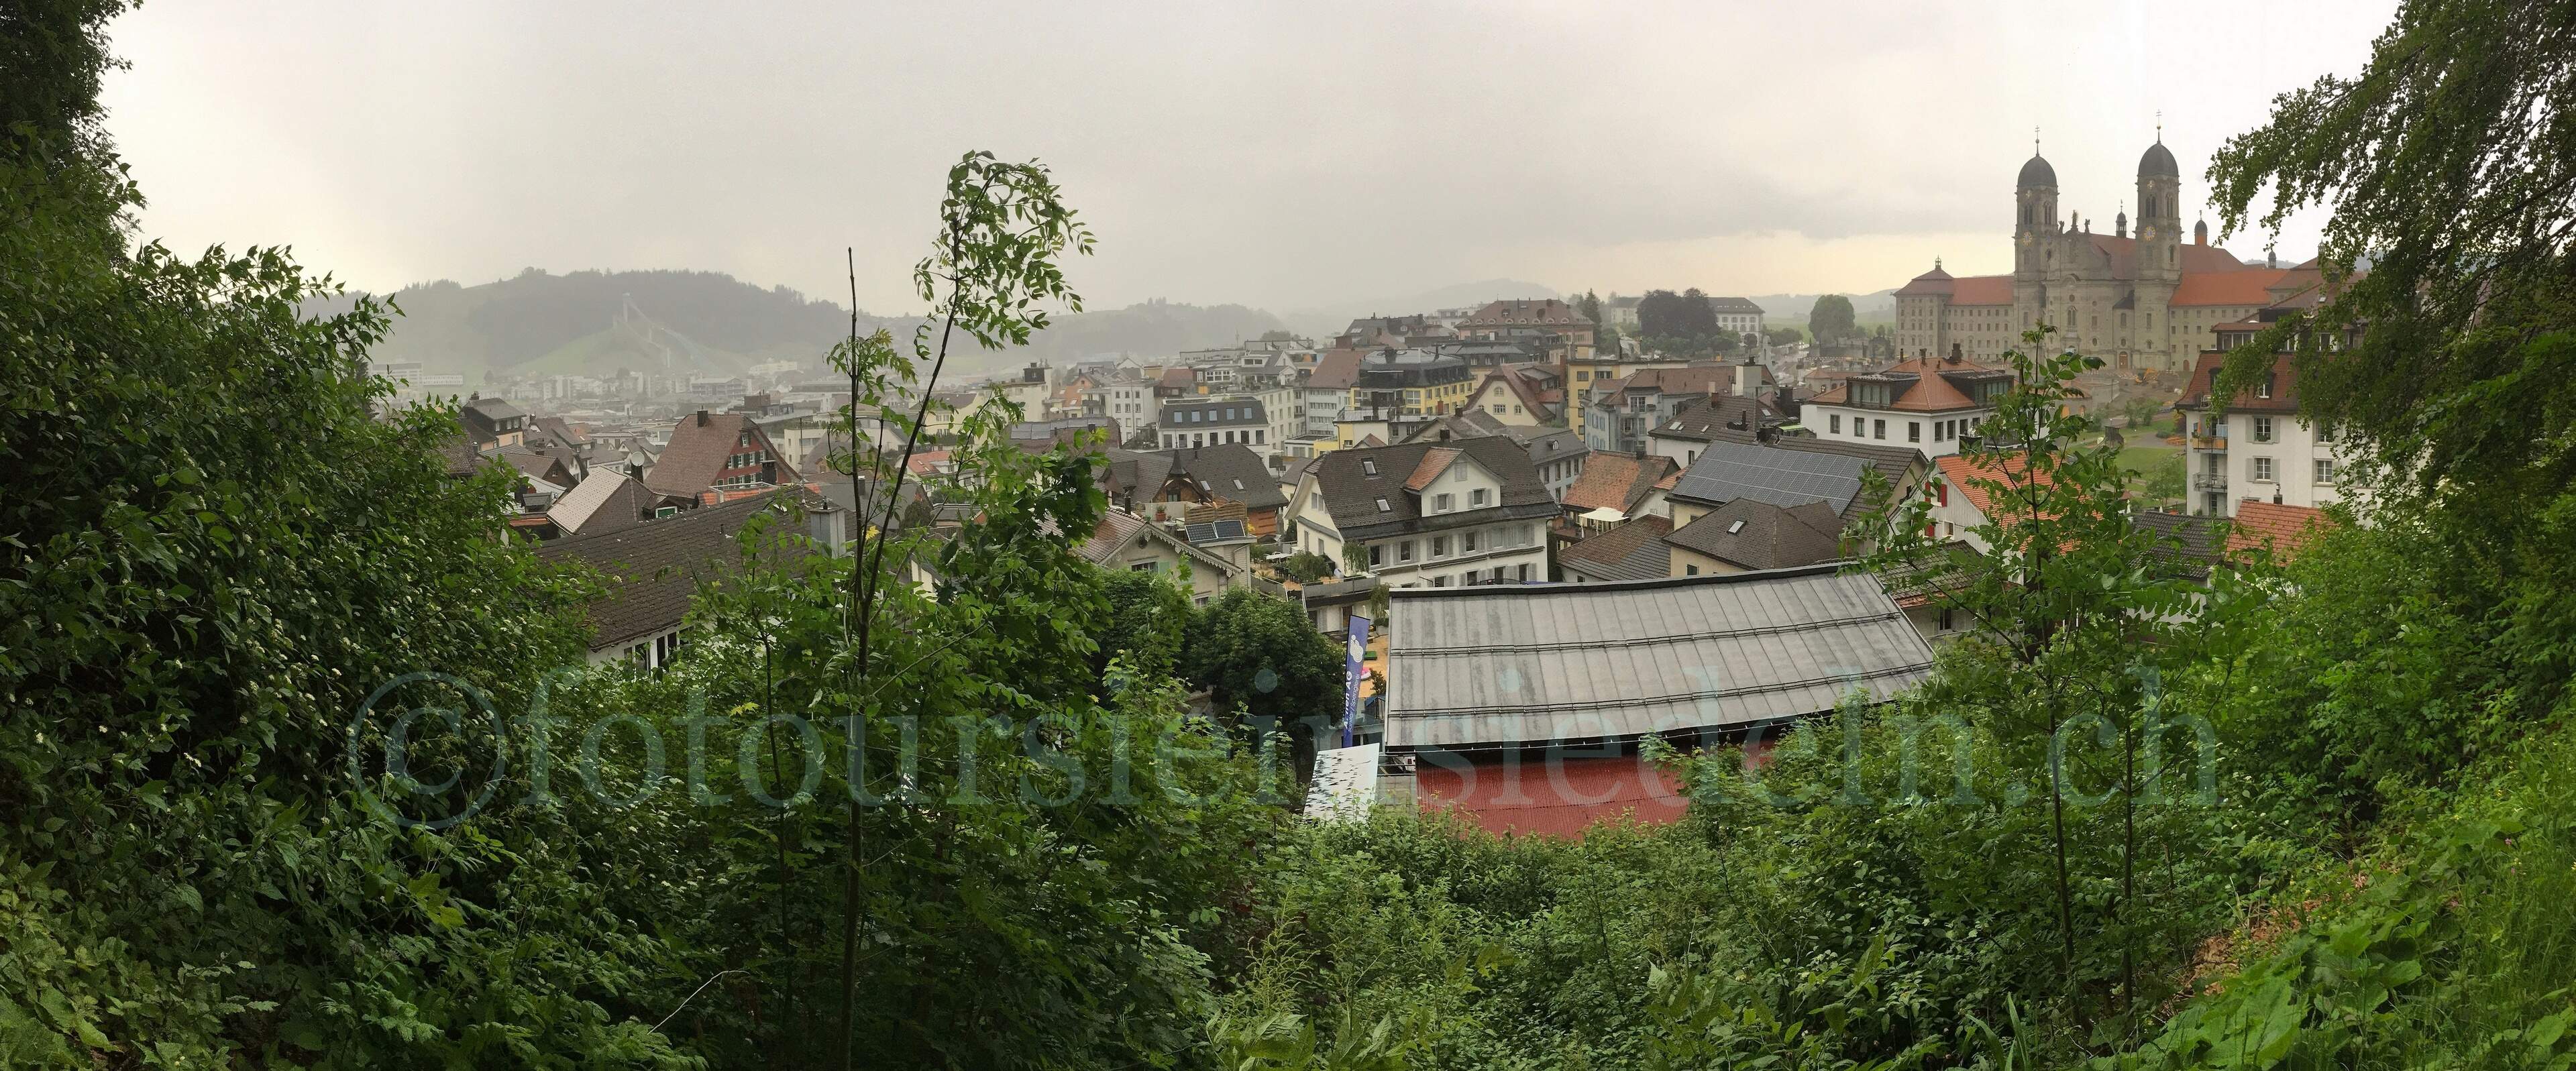 Panorama Einsiedeln 2020 143